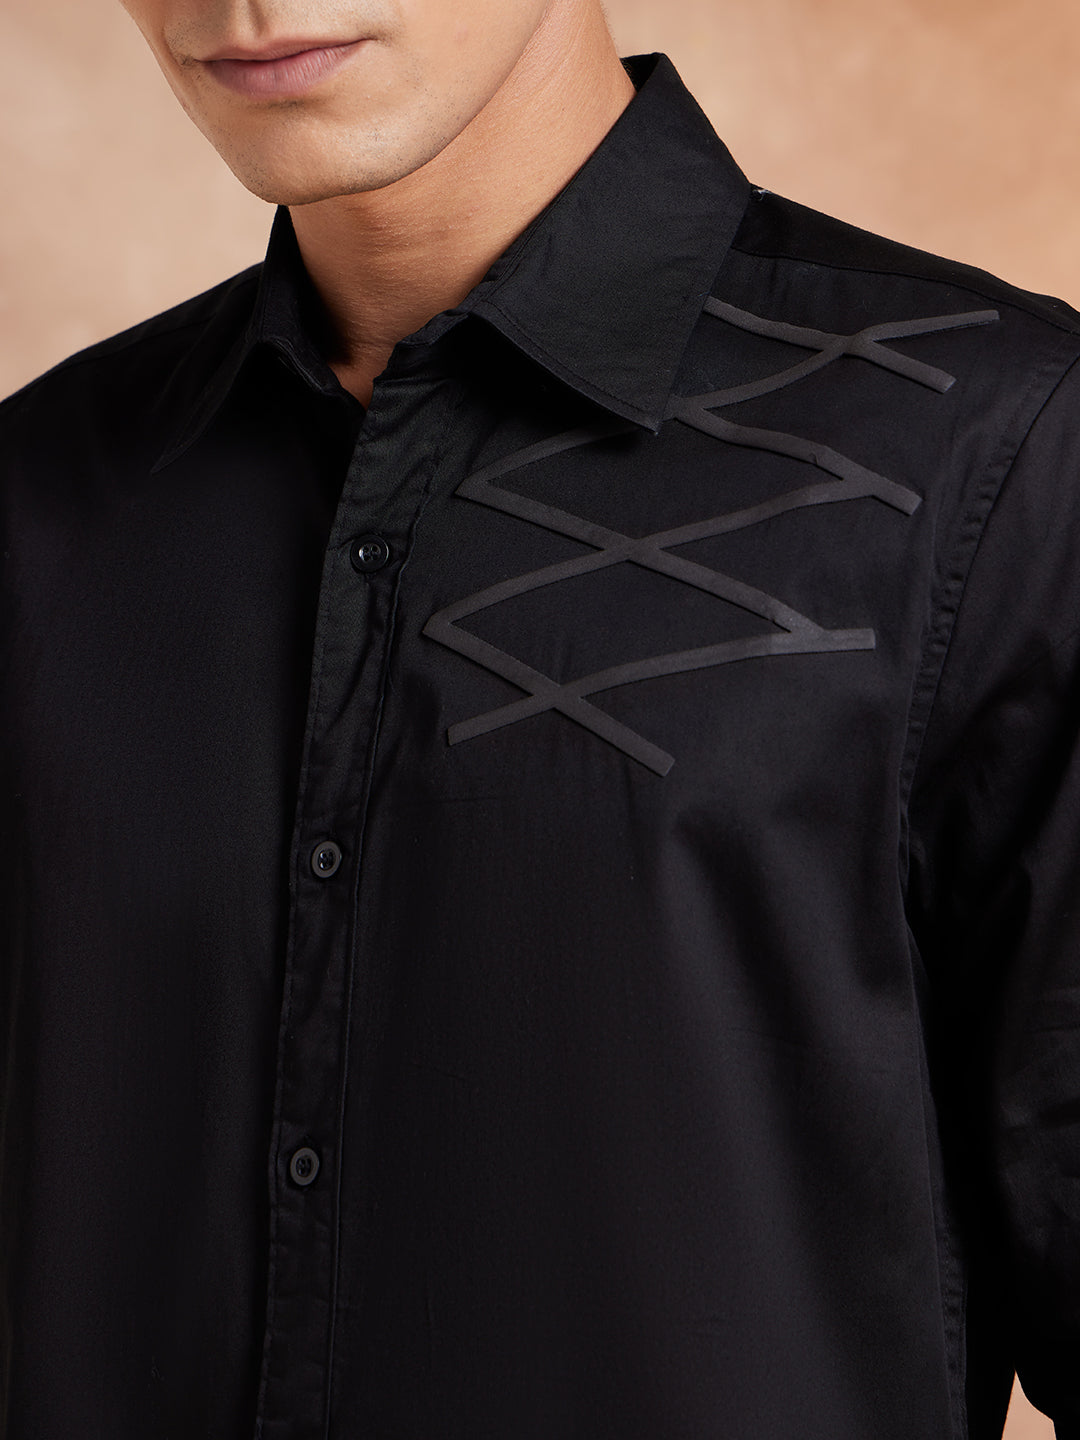 DENNISON Smart Geometric Printed Cotton Casual Shirt